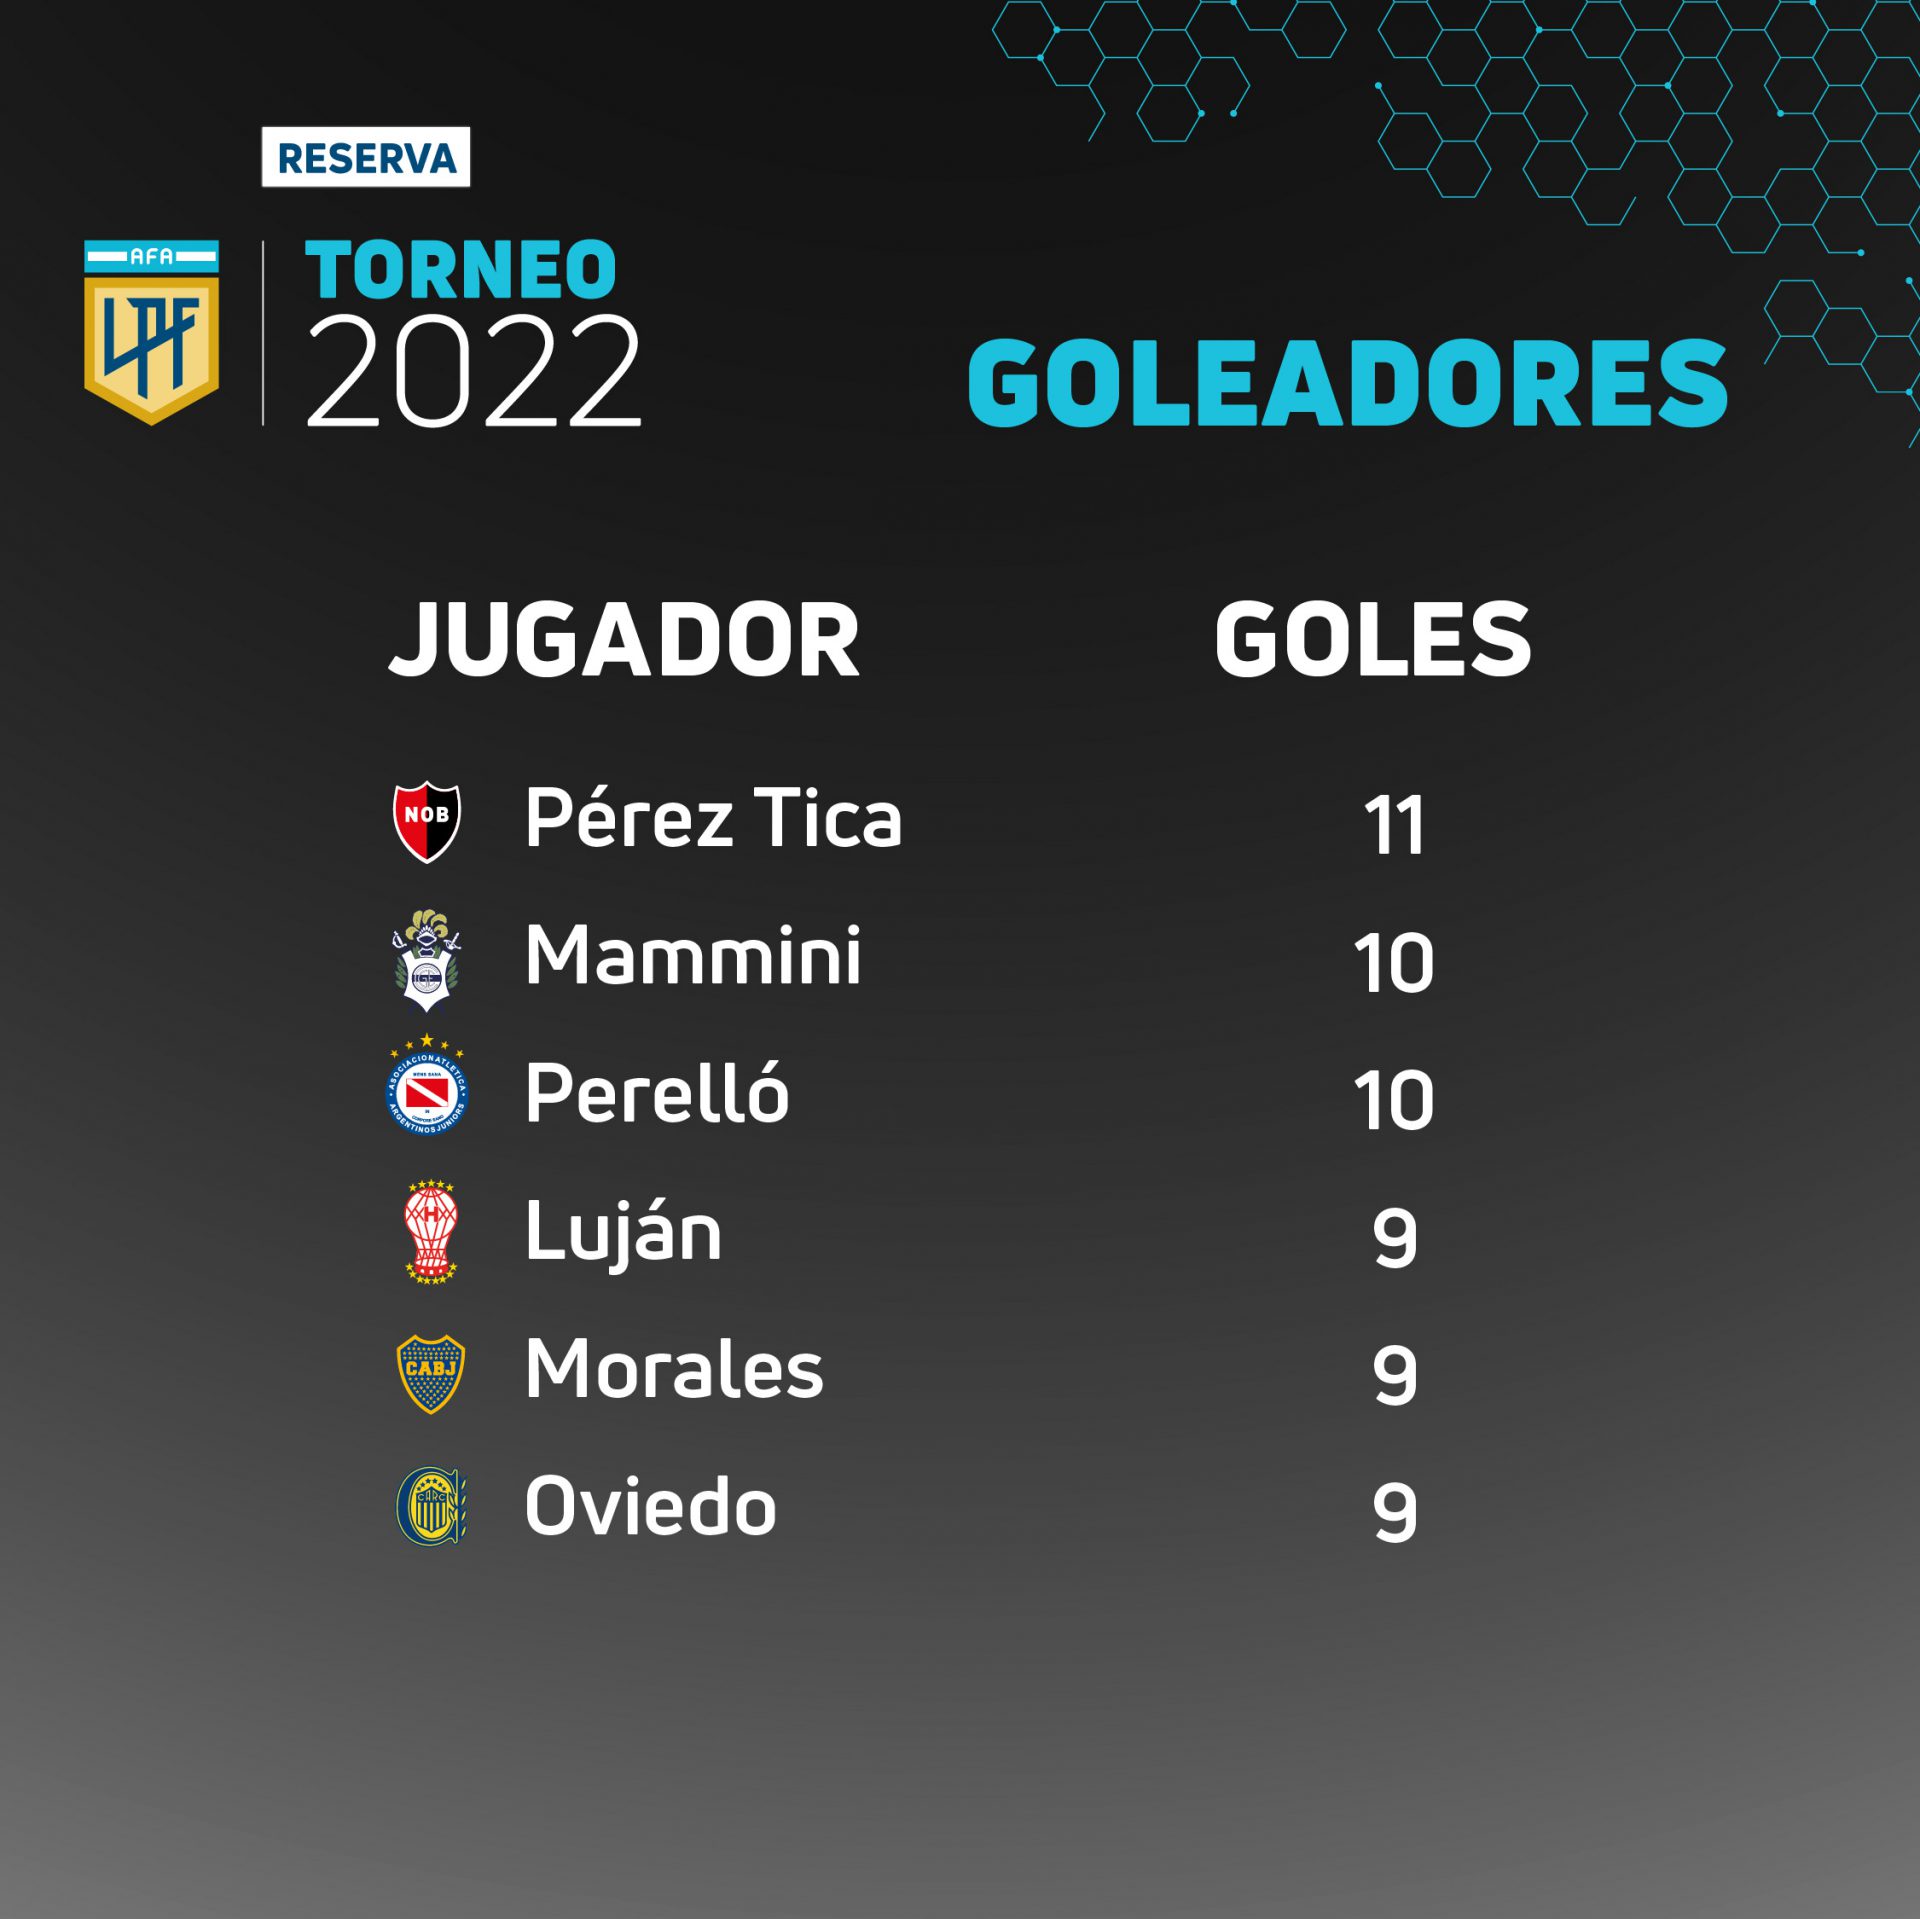 Goleadores-02-1